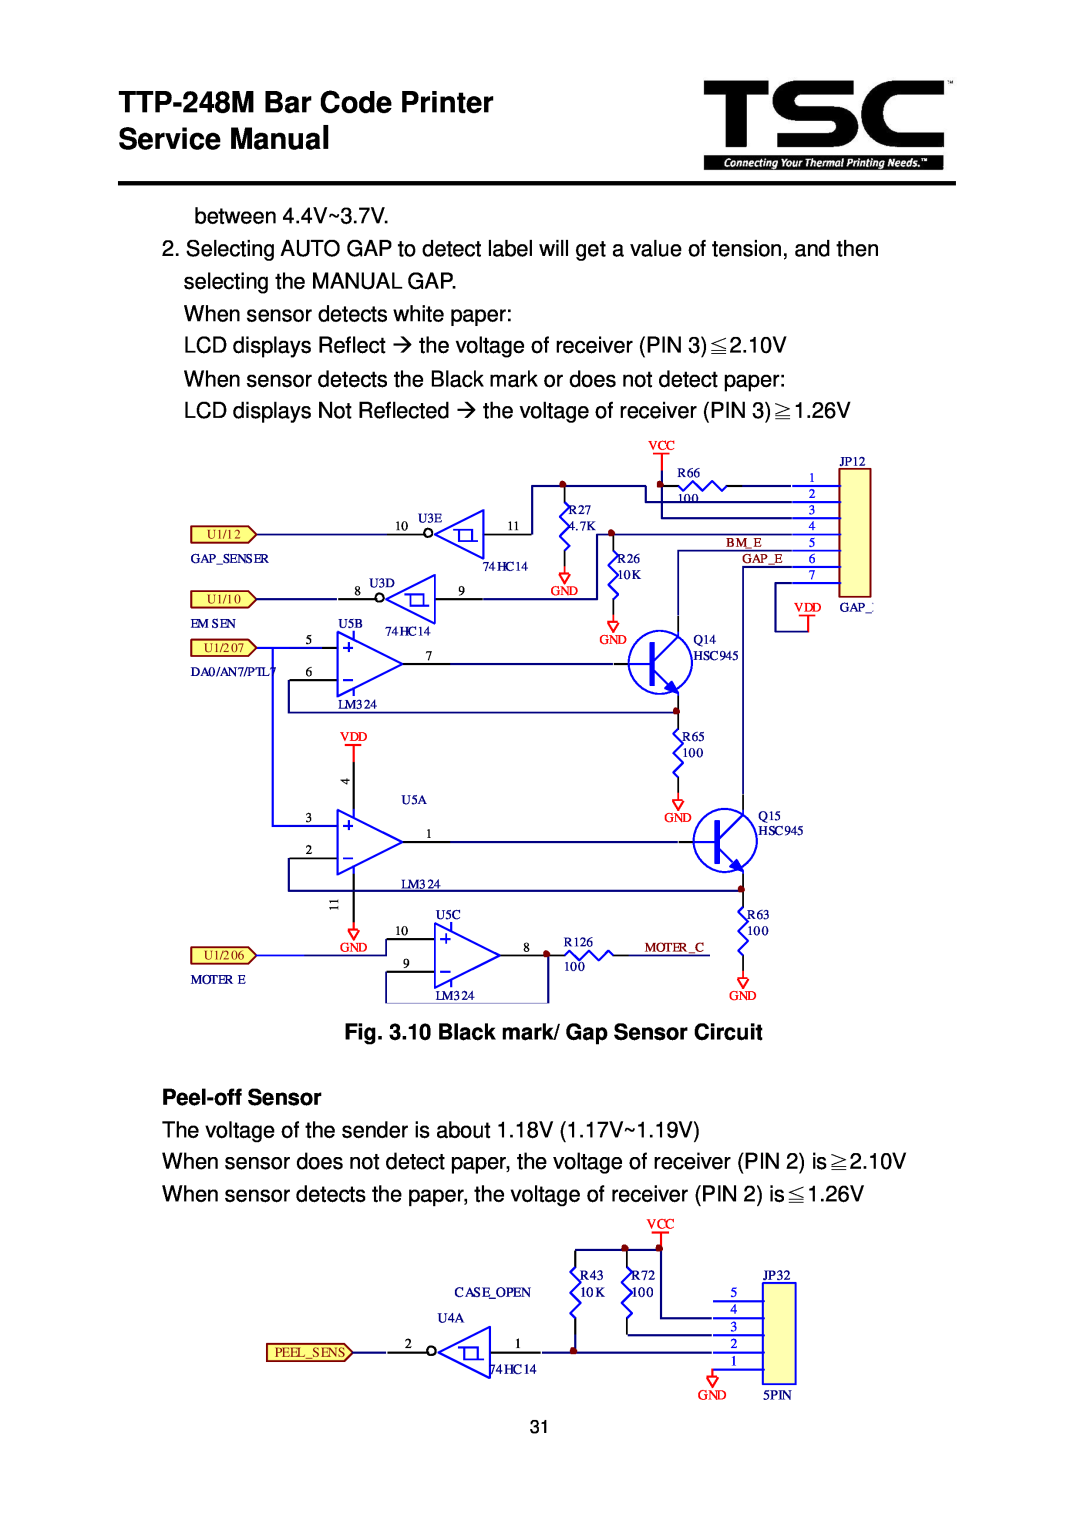 The Speaker Company TTP 248M 10 Black mark/ Gap Sensor Circuit Peel-off Sensor, TTP-248M Bar Code Printer Service Manual 